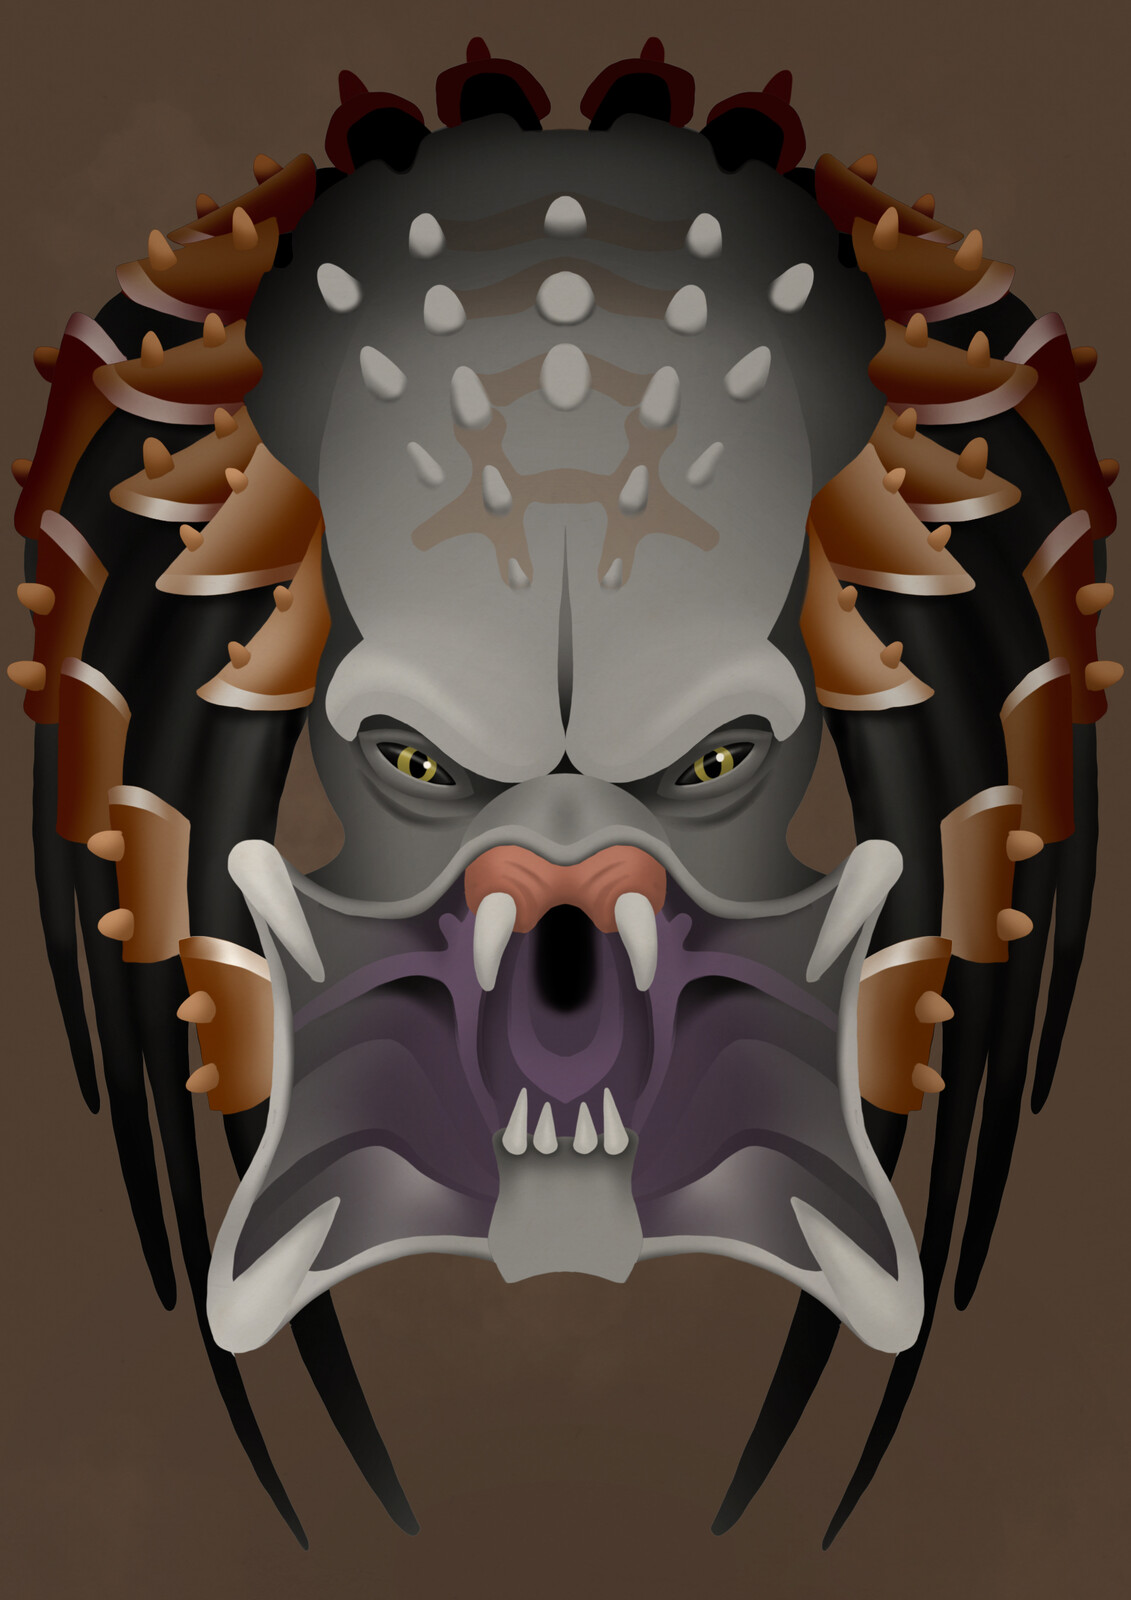 Predator illustration